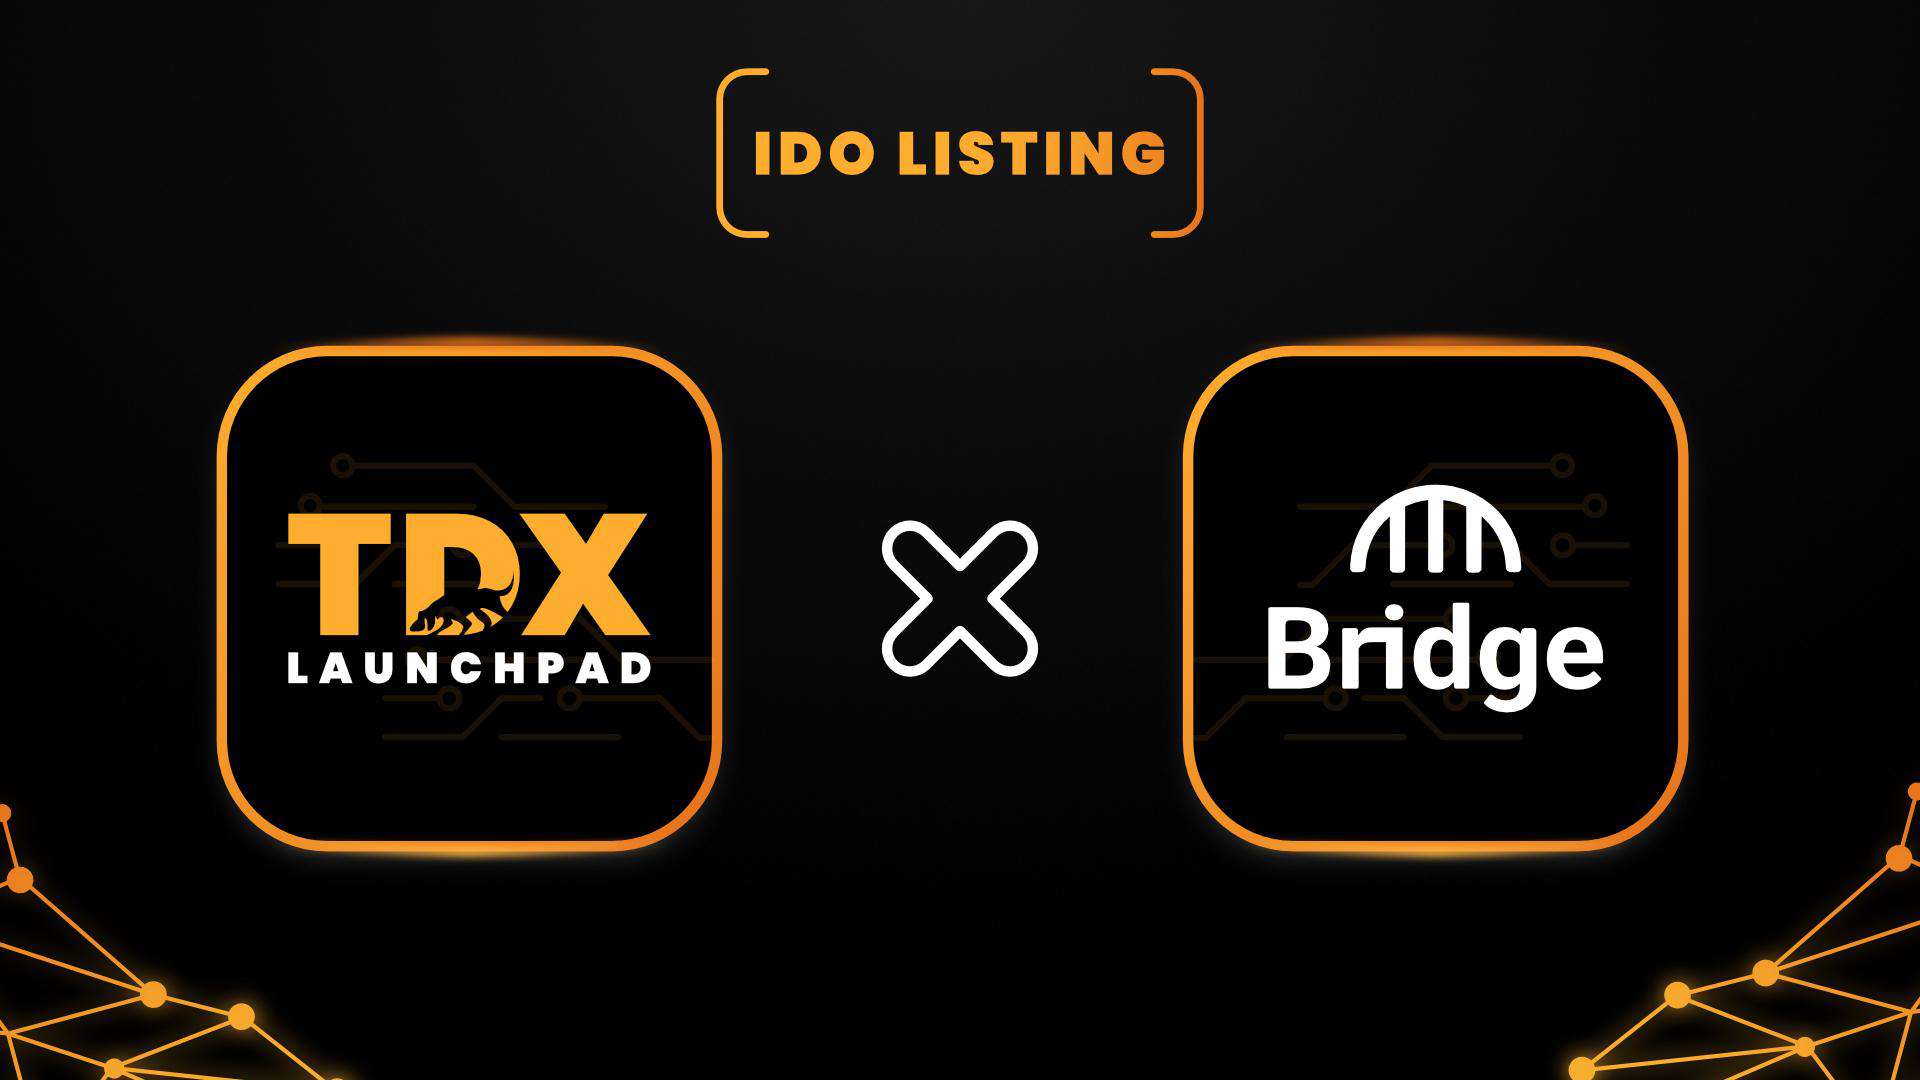 Bridge-network-is-launching-its-ido-on-tdx-launchpad